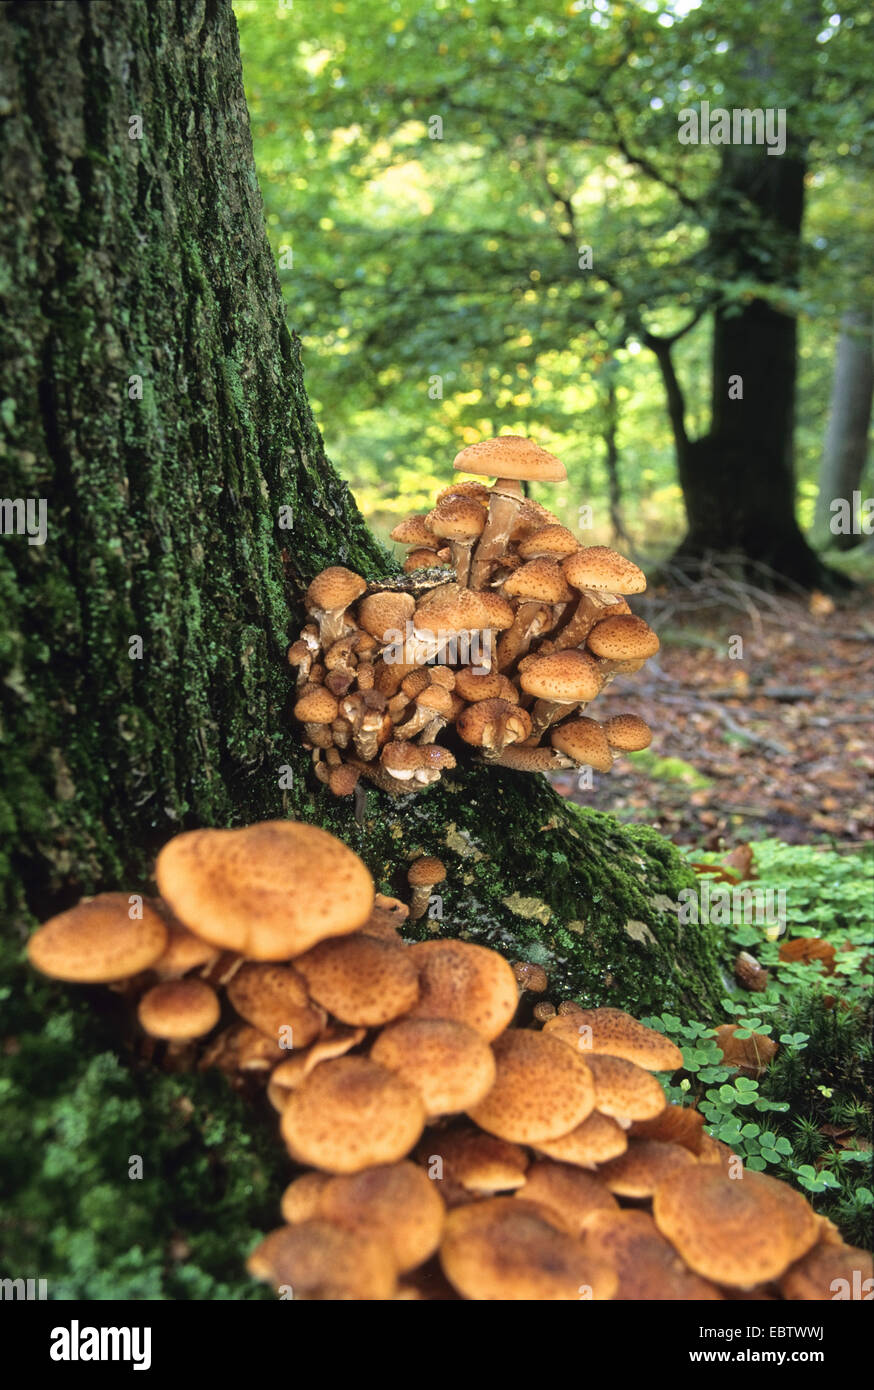 honey fungus (Armillaria mellea), Mushrooms at the base of a tree trunk, Germany Stock Photo